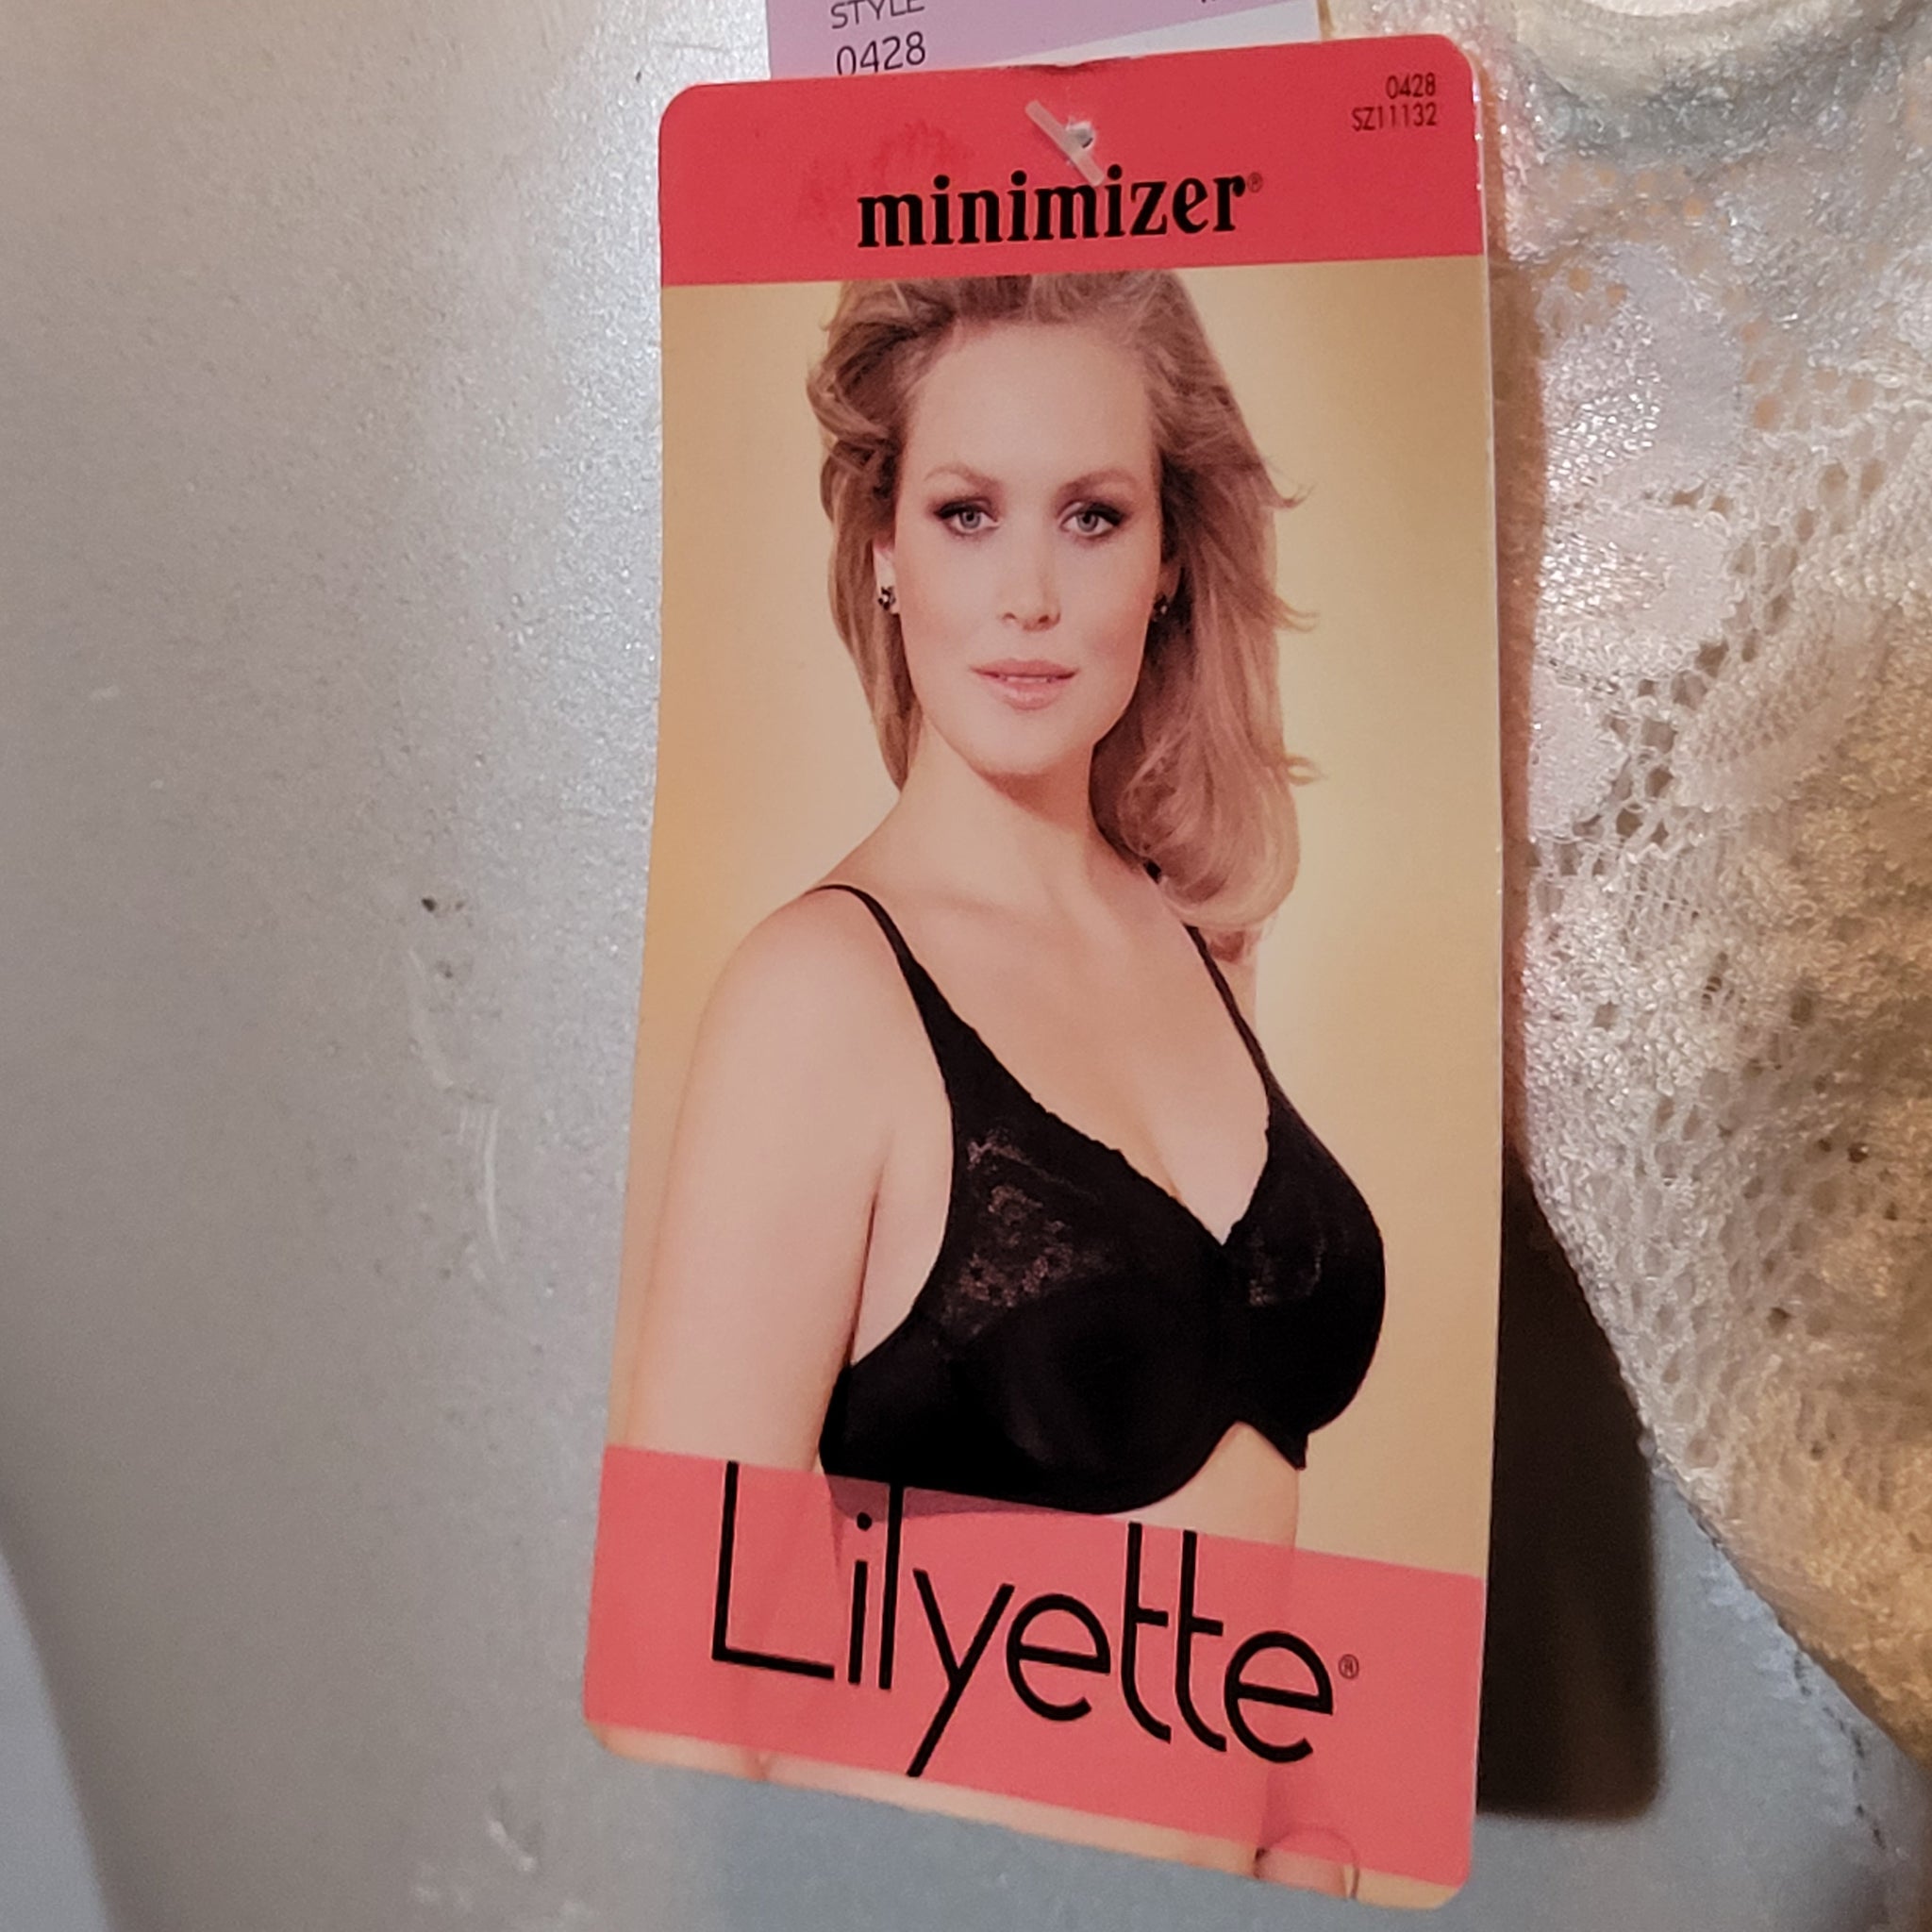 Lilyette Bra #428 Minimizer Bra